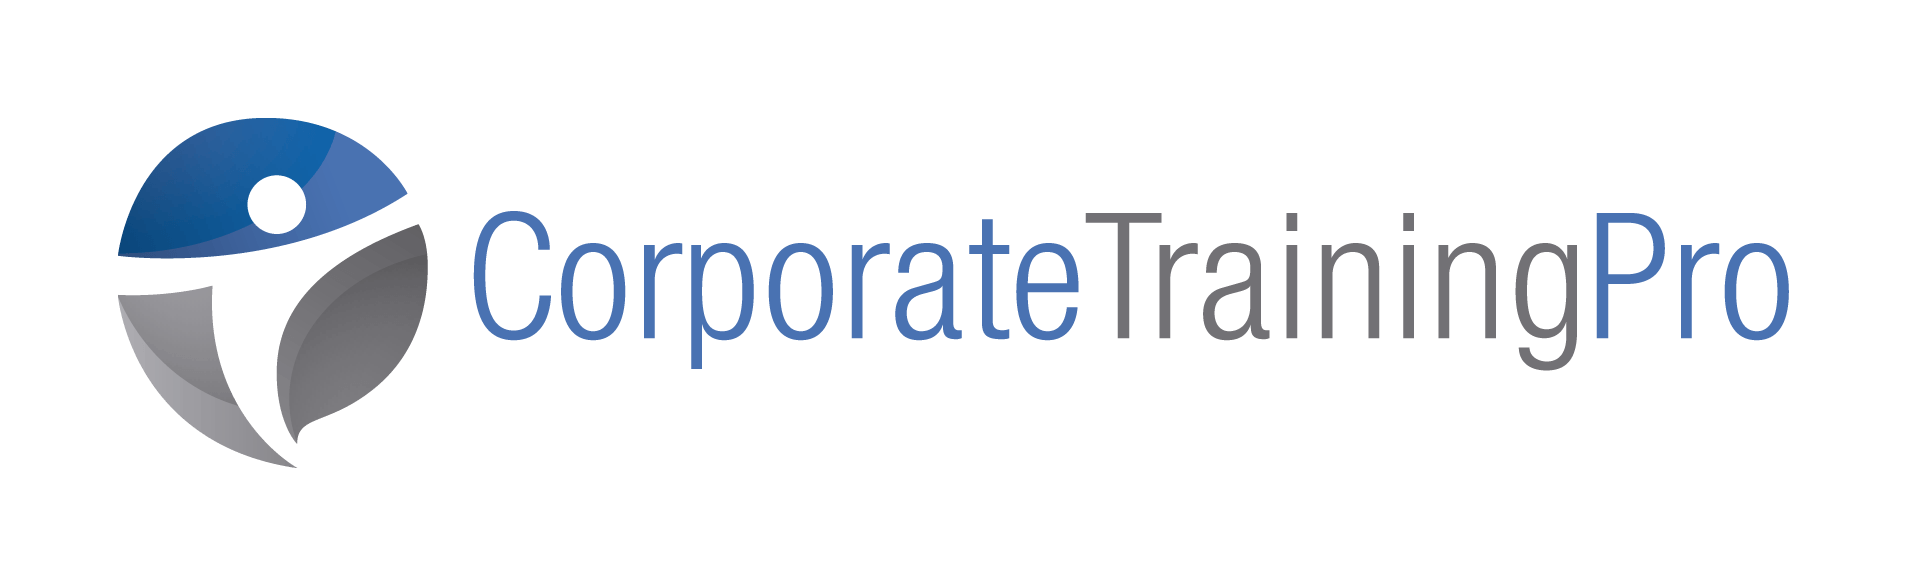 Corporate Training Logo - Home - Corporate Training Pro